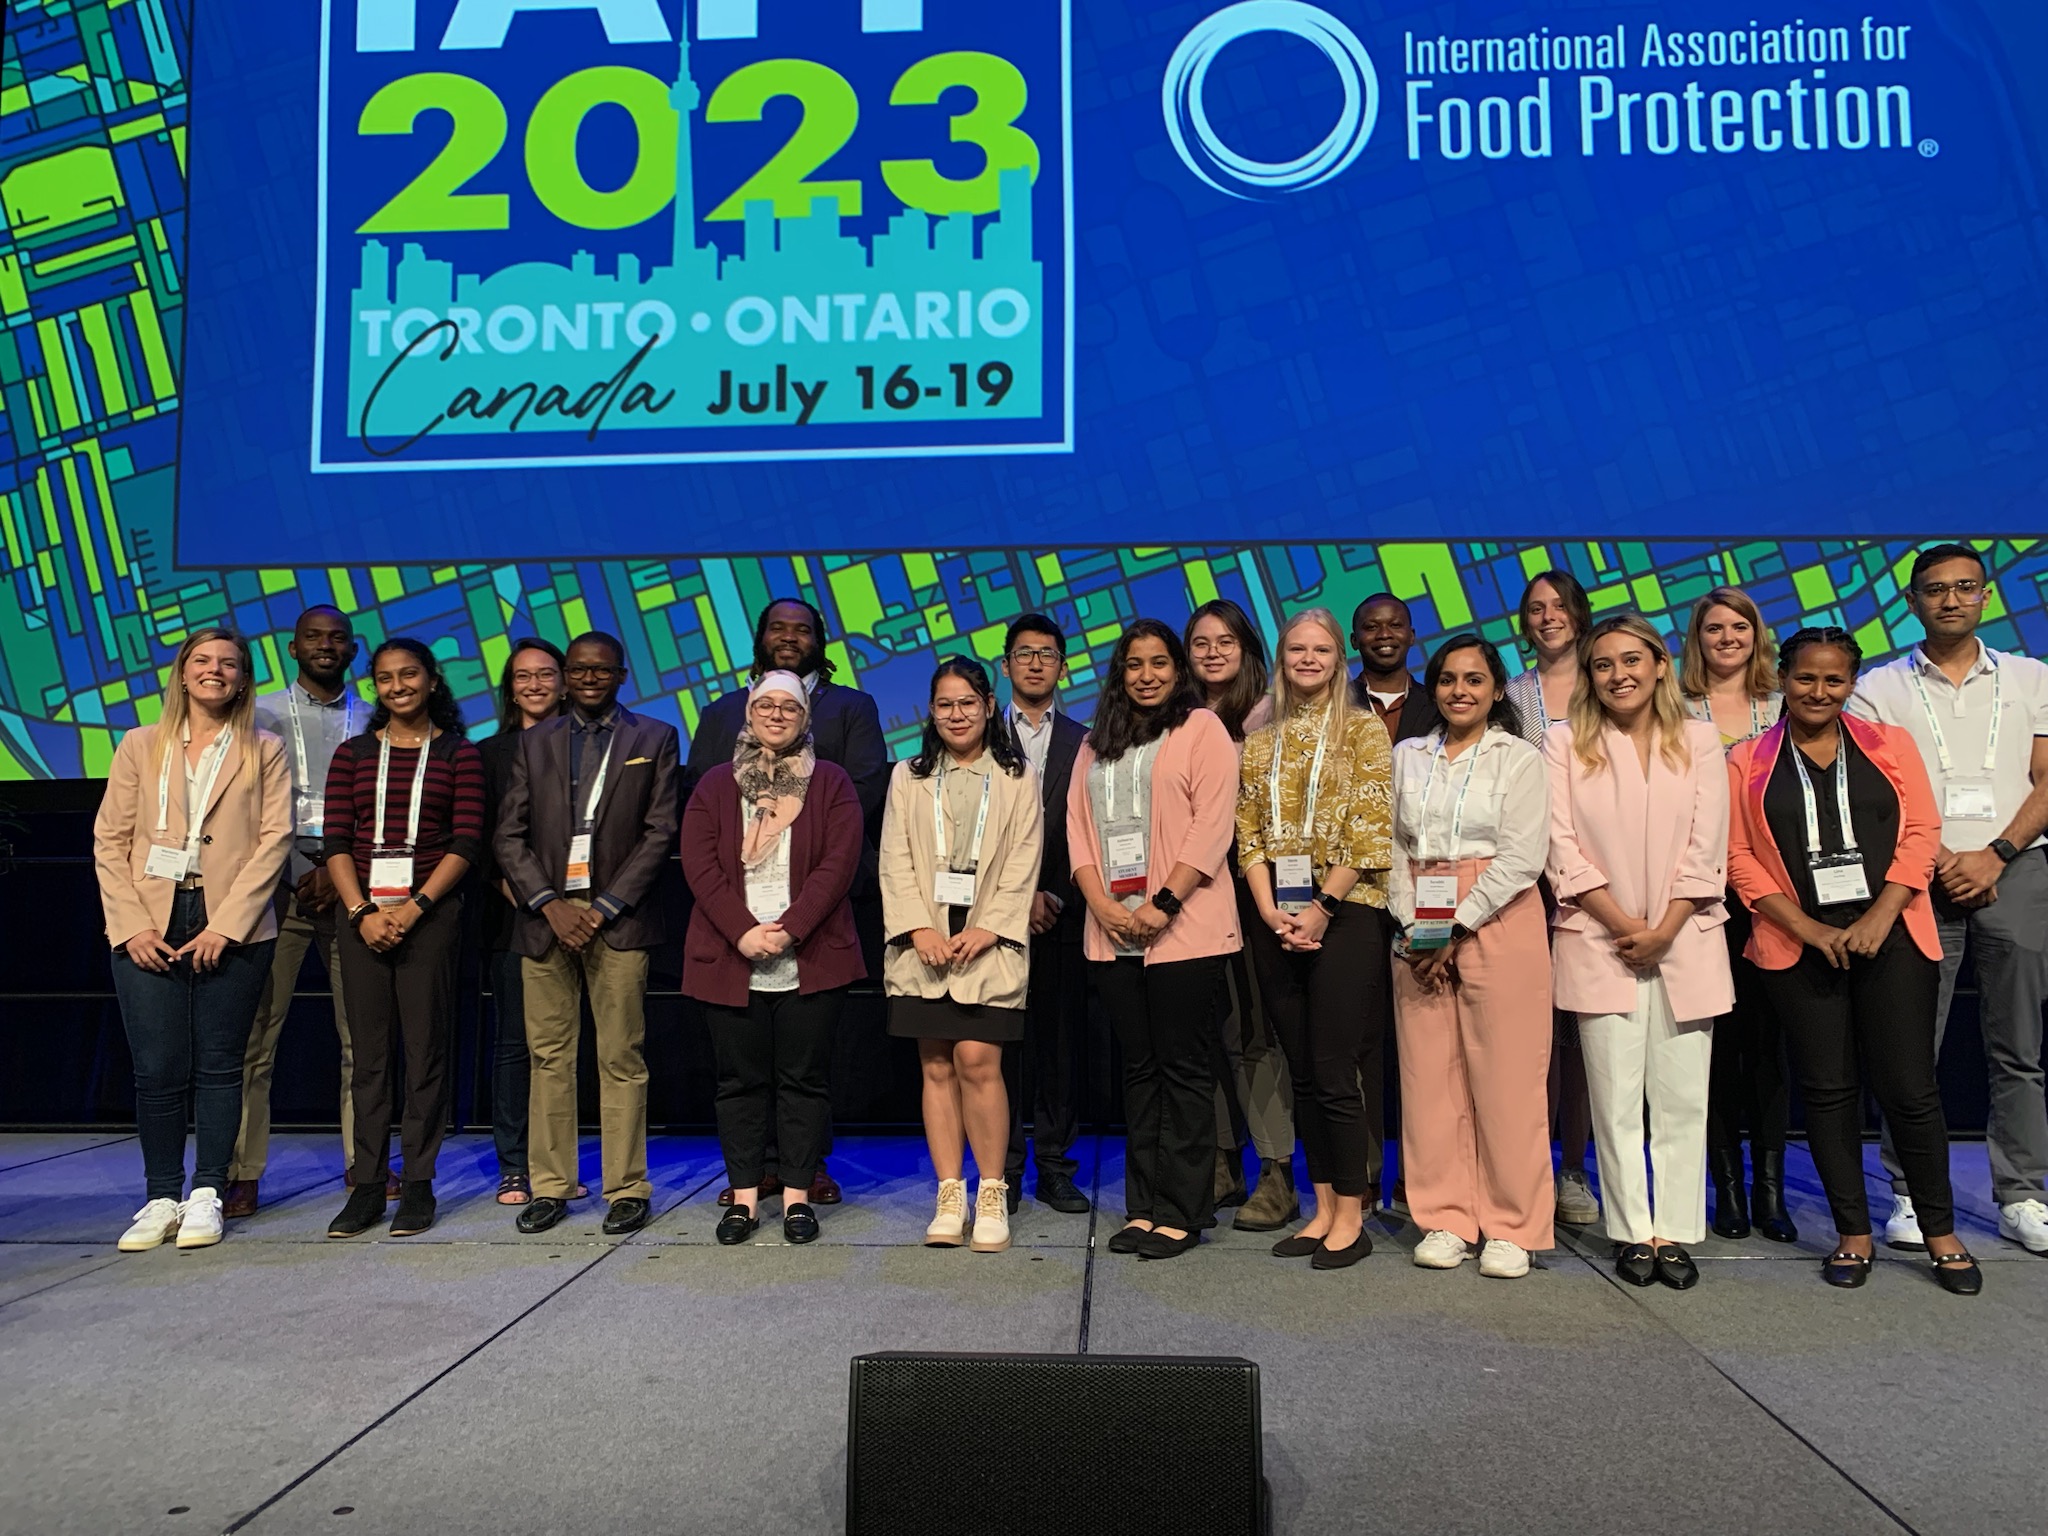 Akshaya Balaji at 2023 International Associaton for Food Protection conference in Toronto, Ontario.